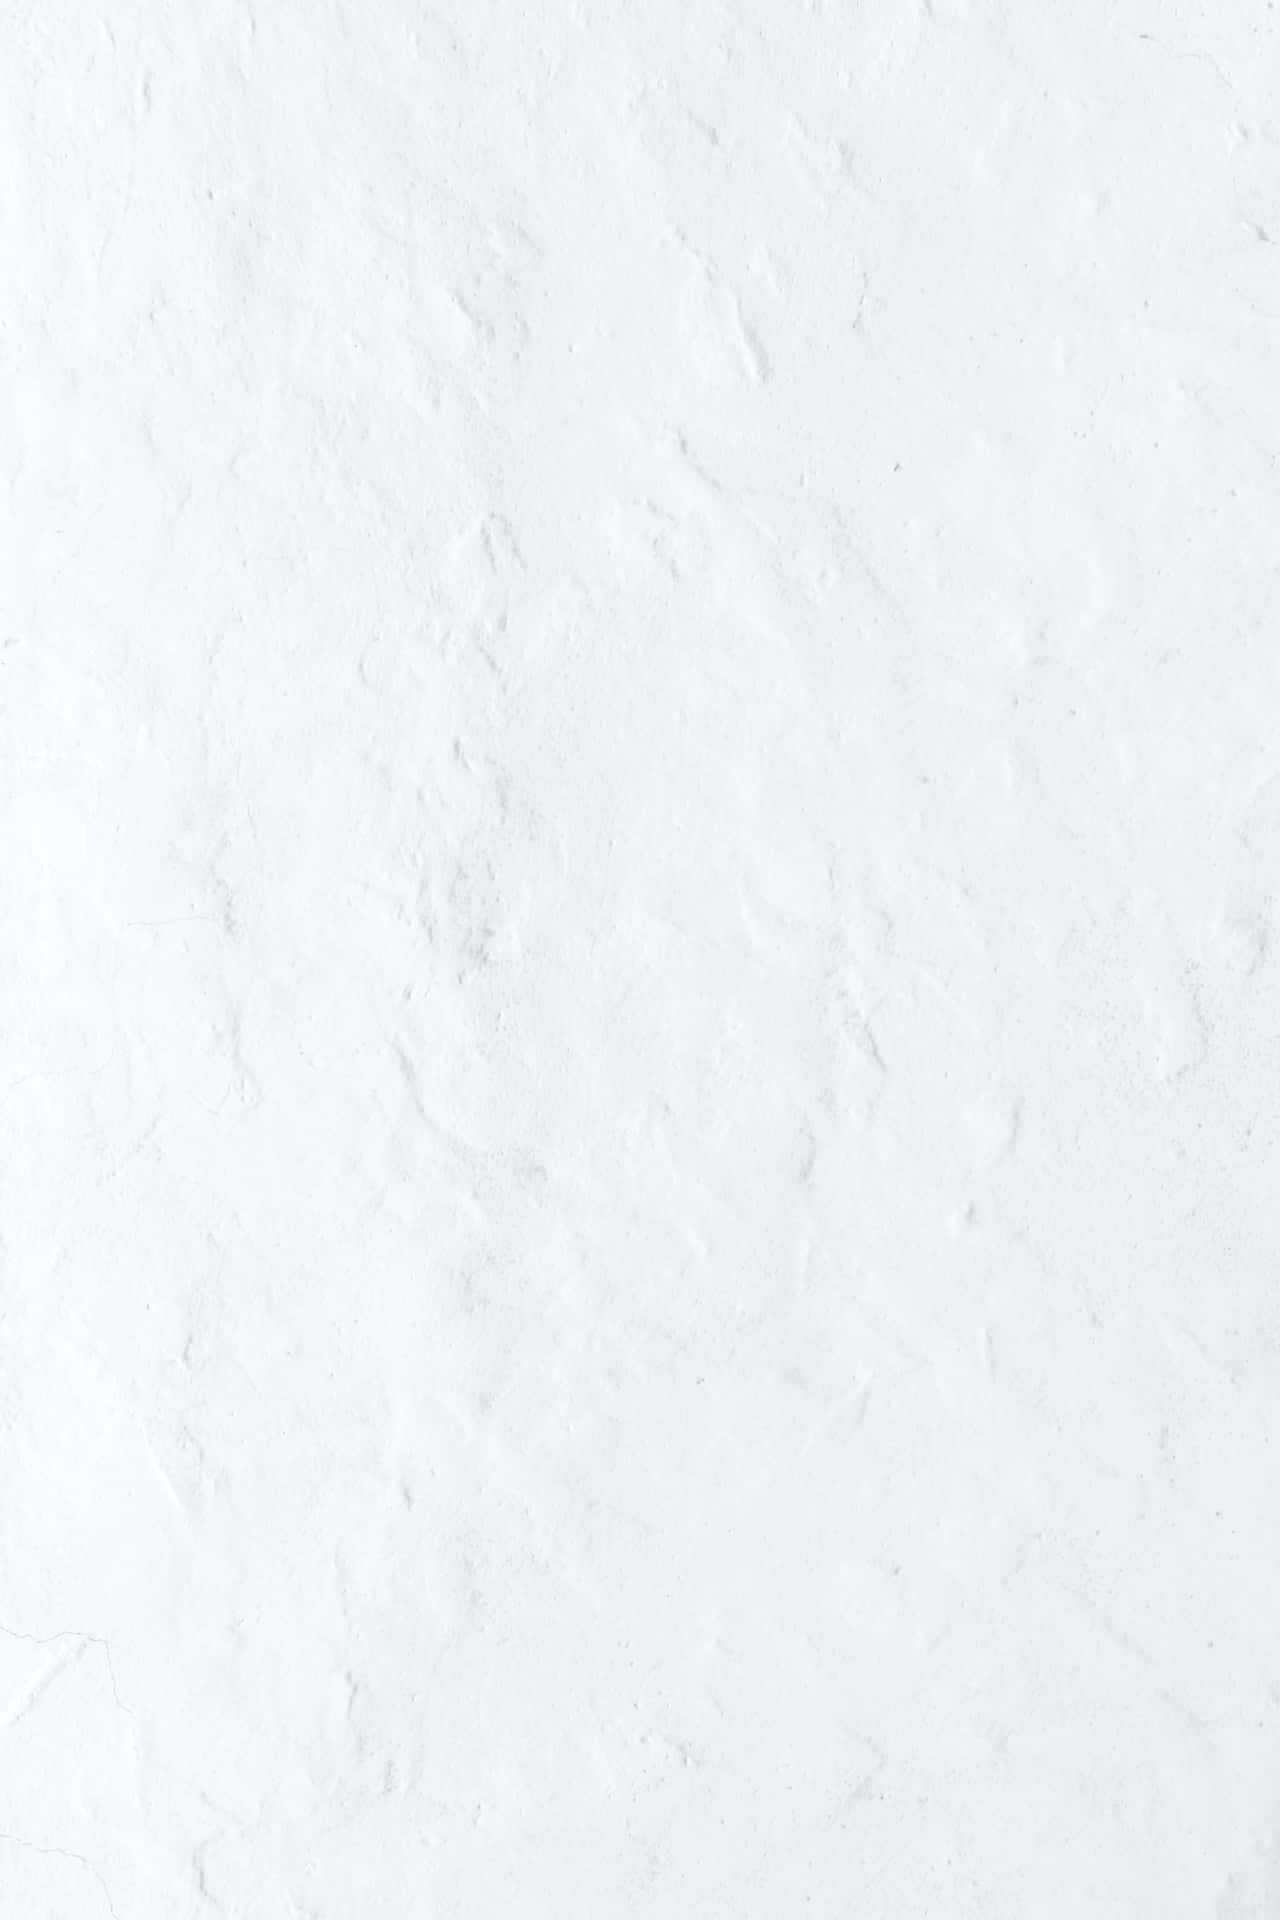 Minimalist Pure White Background